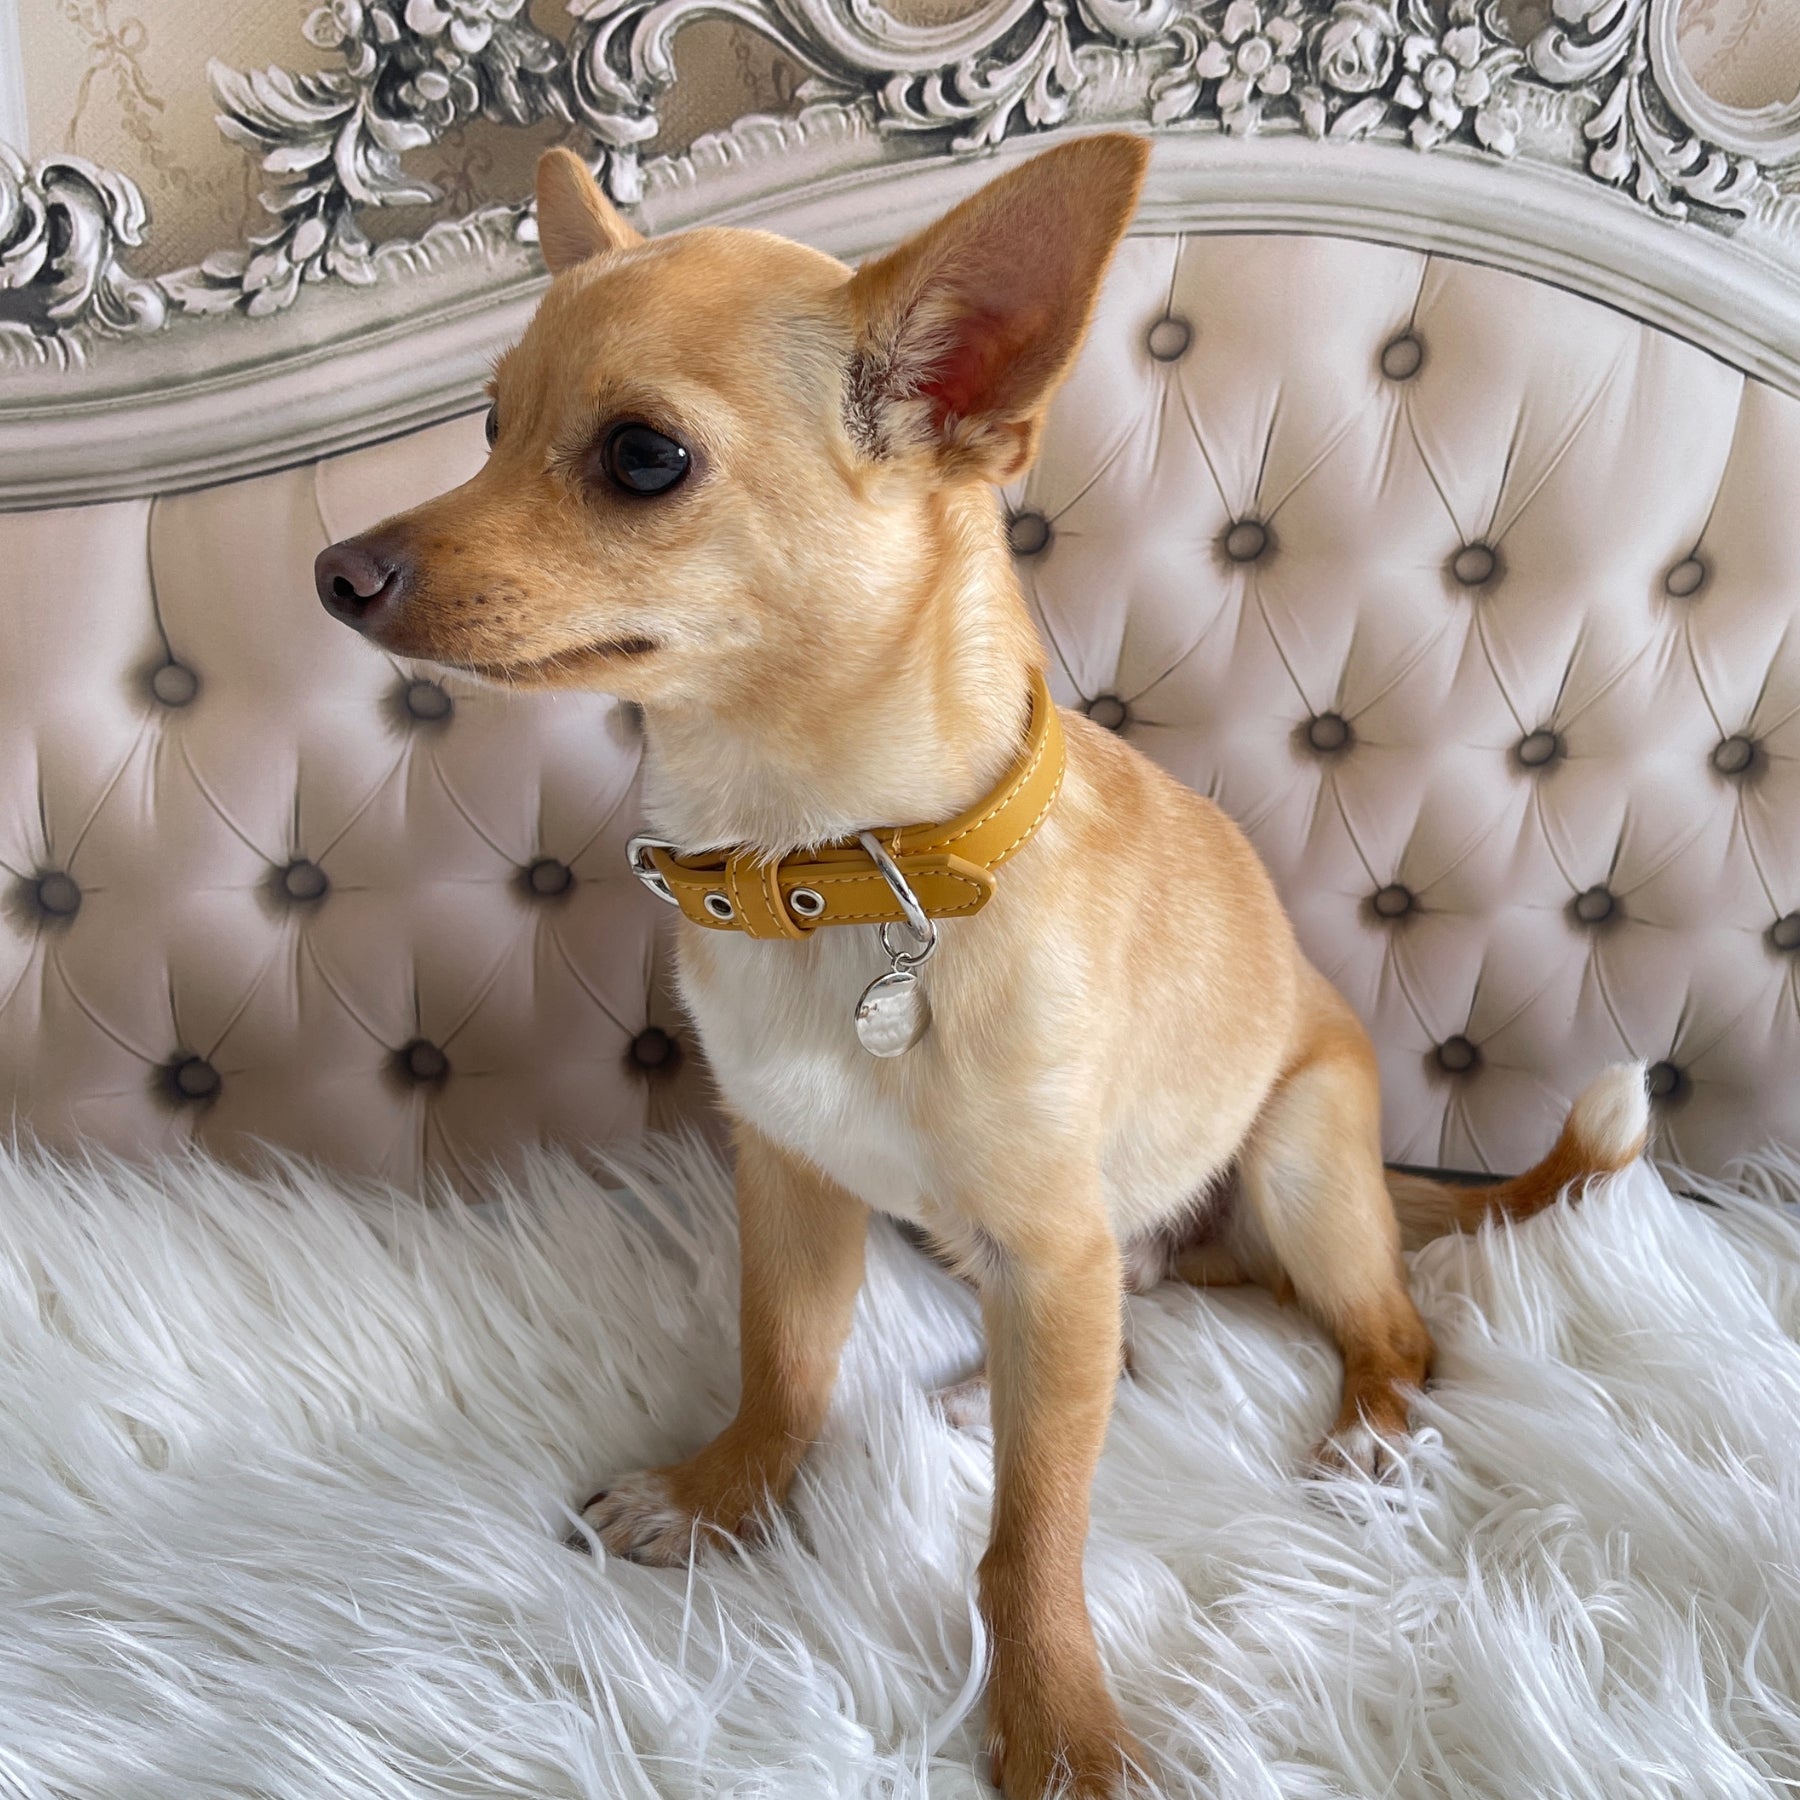 Dog Collar - Honeycomb - Pooch Luxury